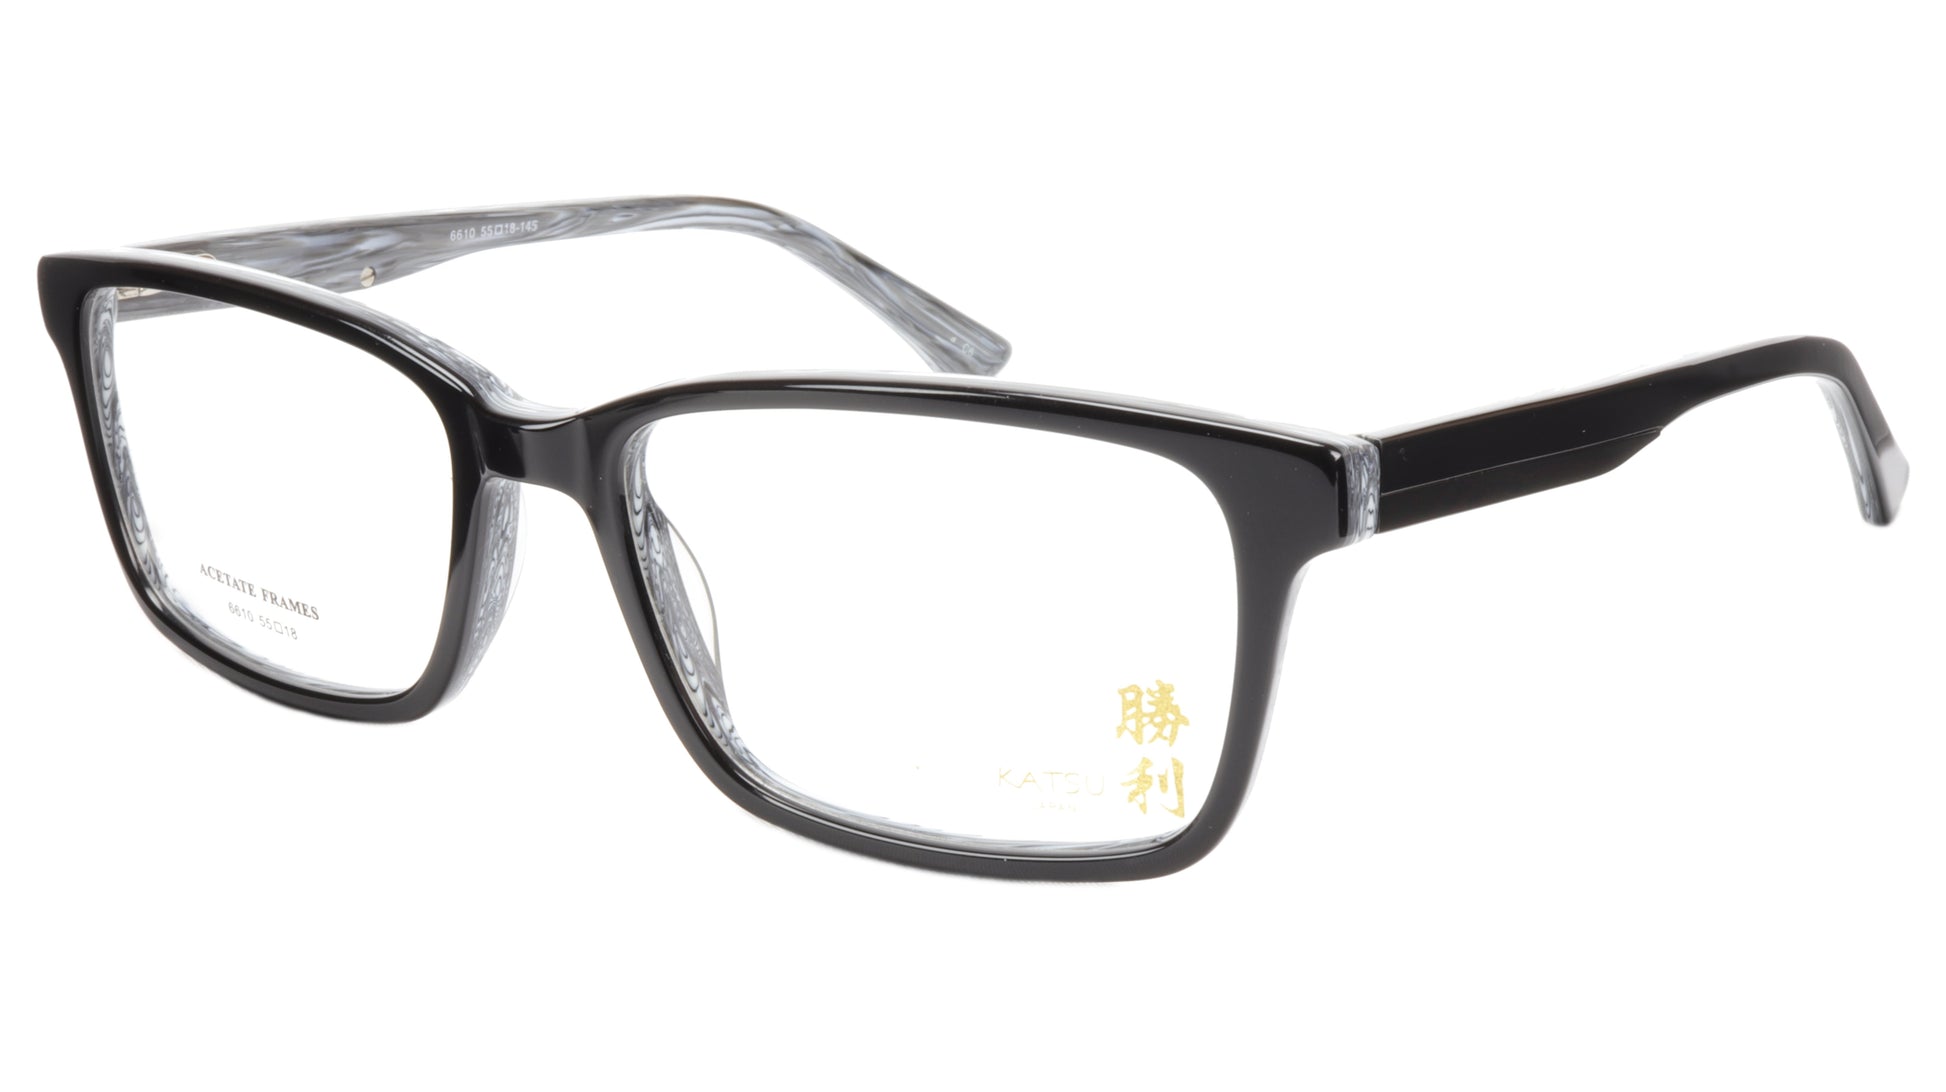 KATSU 6610 Eyeglasses Frame Acetate Black White Swirl Lacquer 55-18-145 Japan - Frame Bay